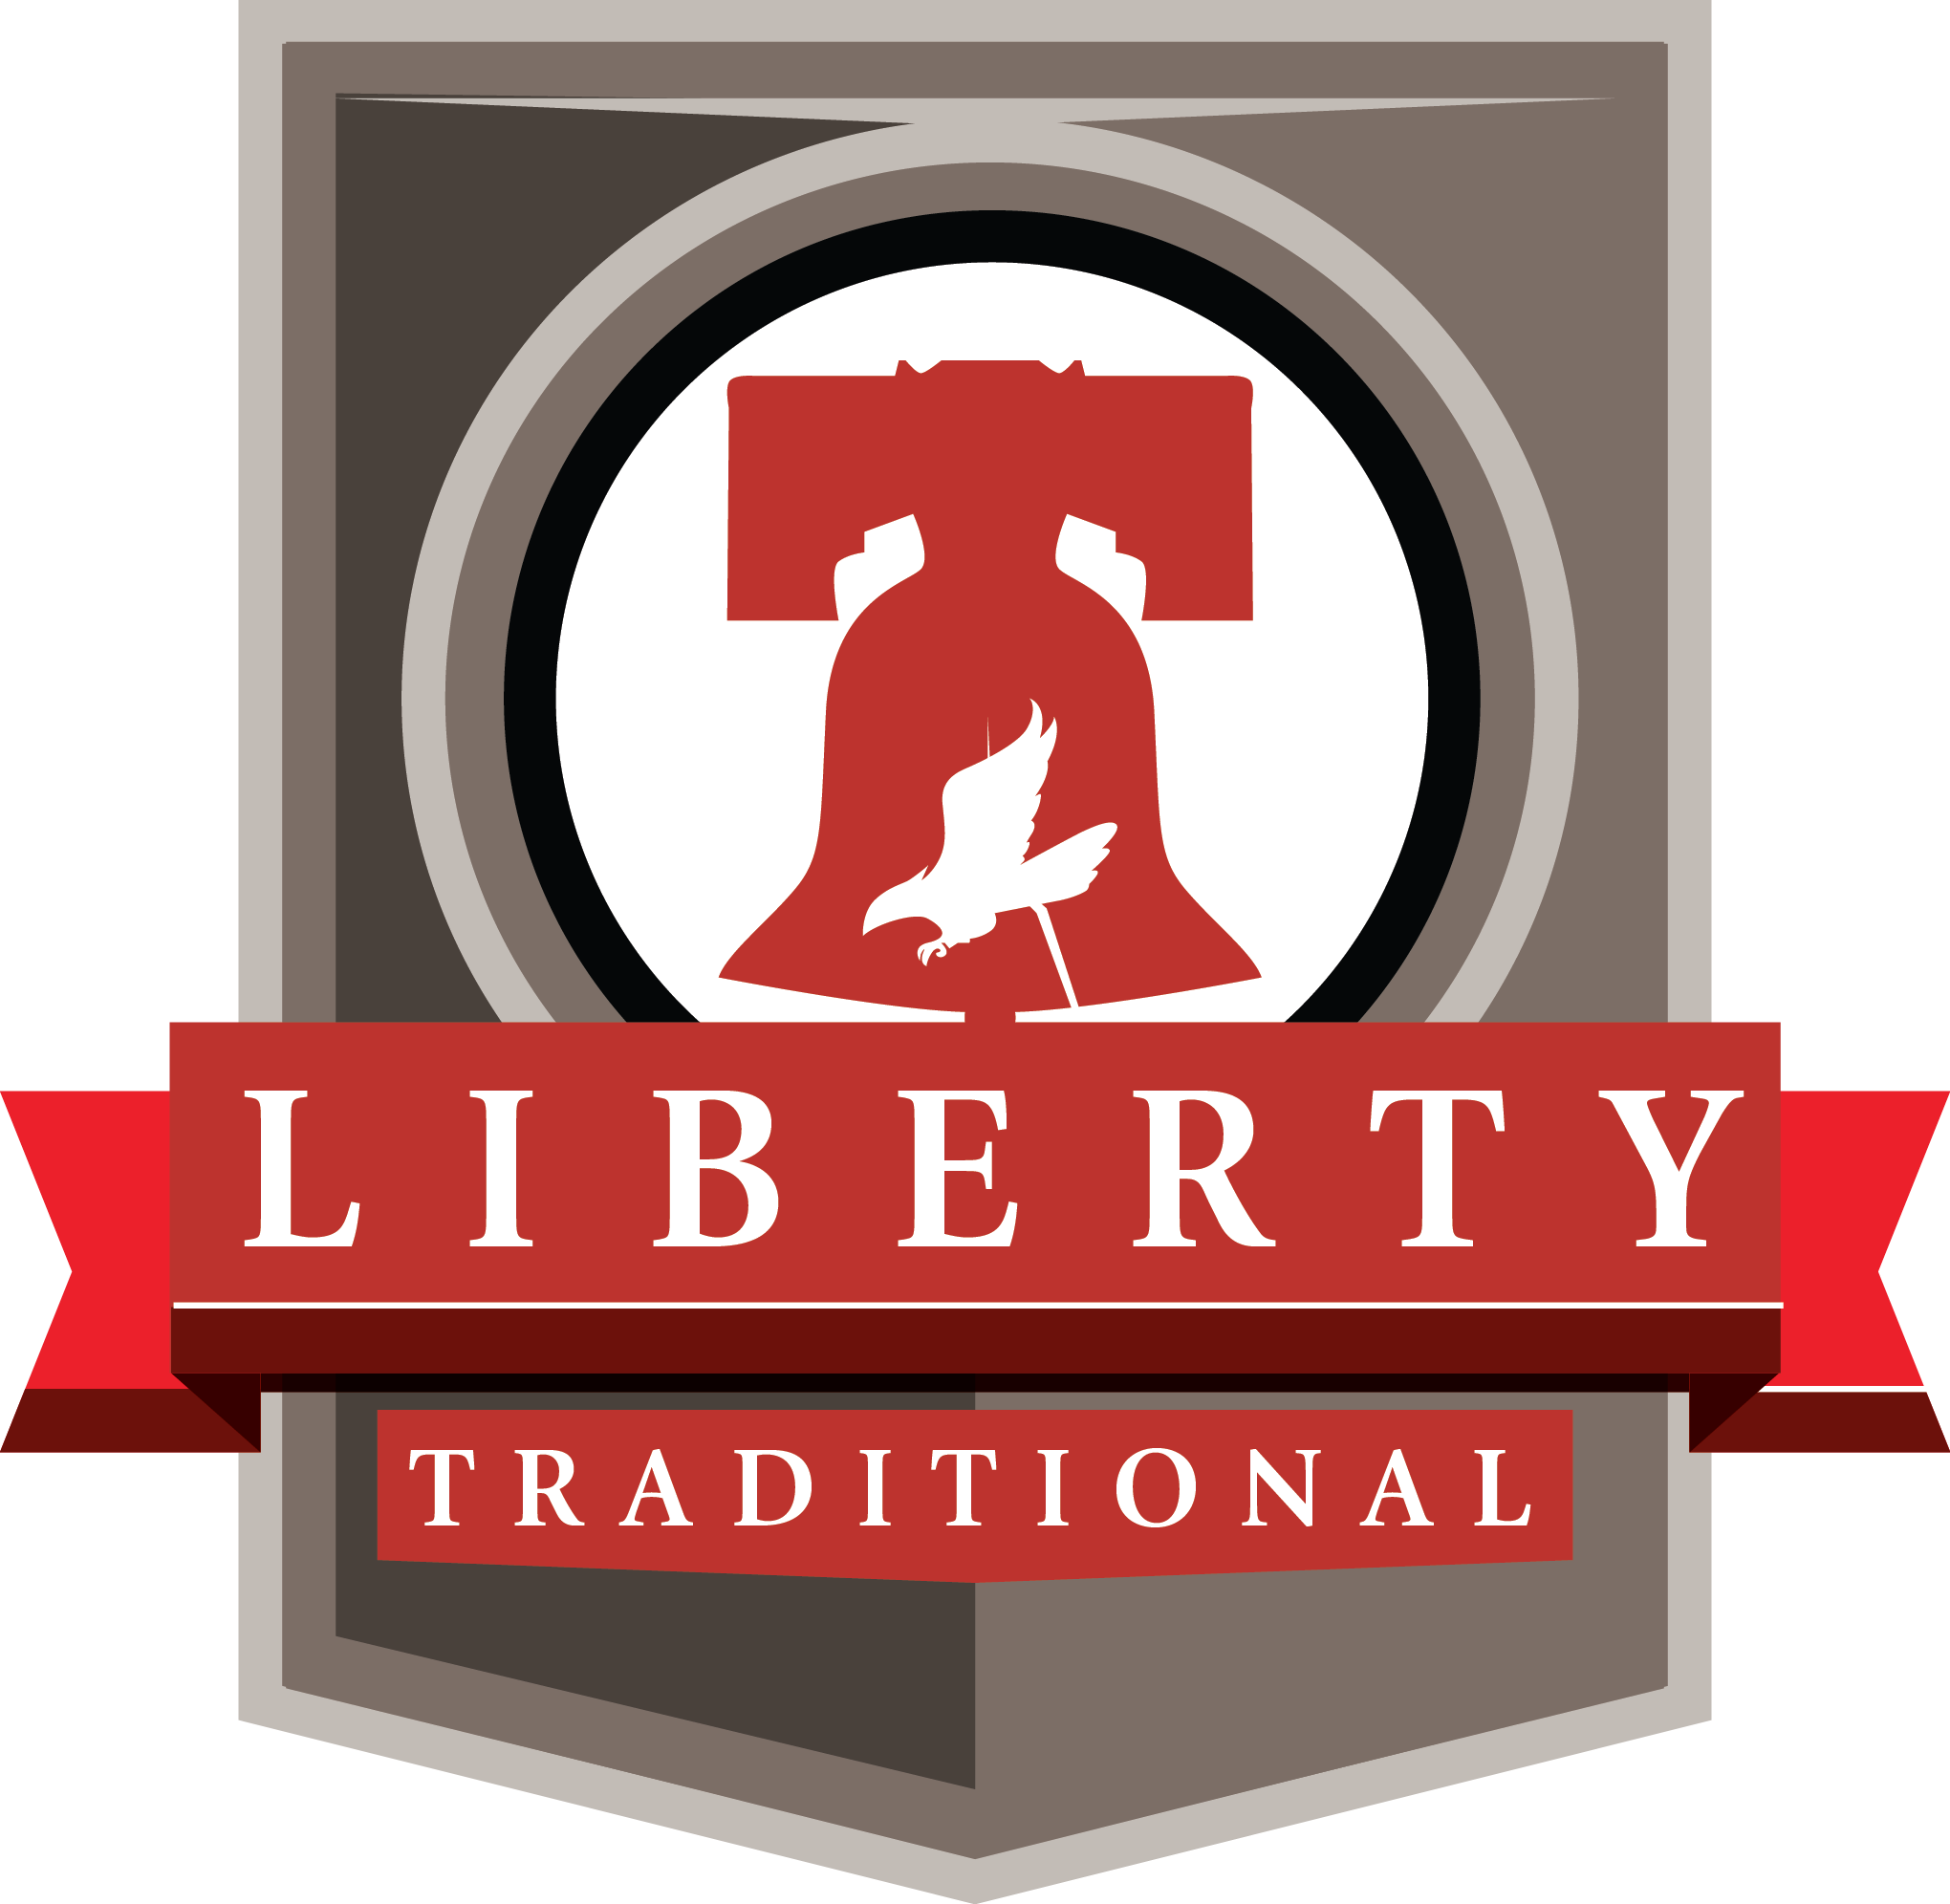 Lts Logos/stationery - Liberty Traditional Charter School (2040x1992)